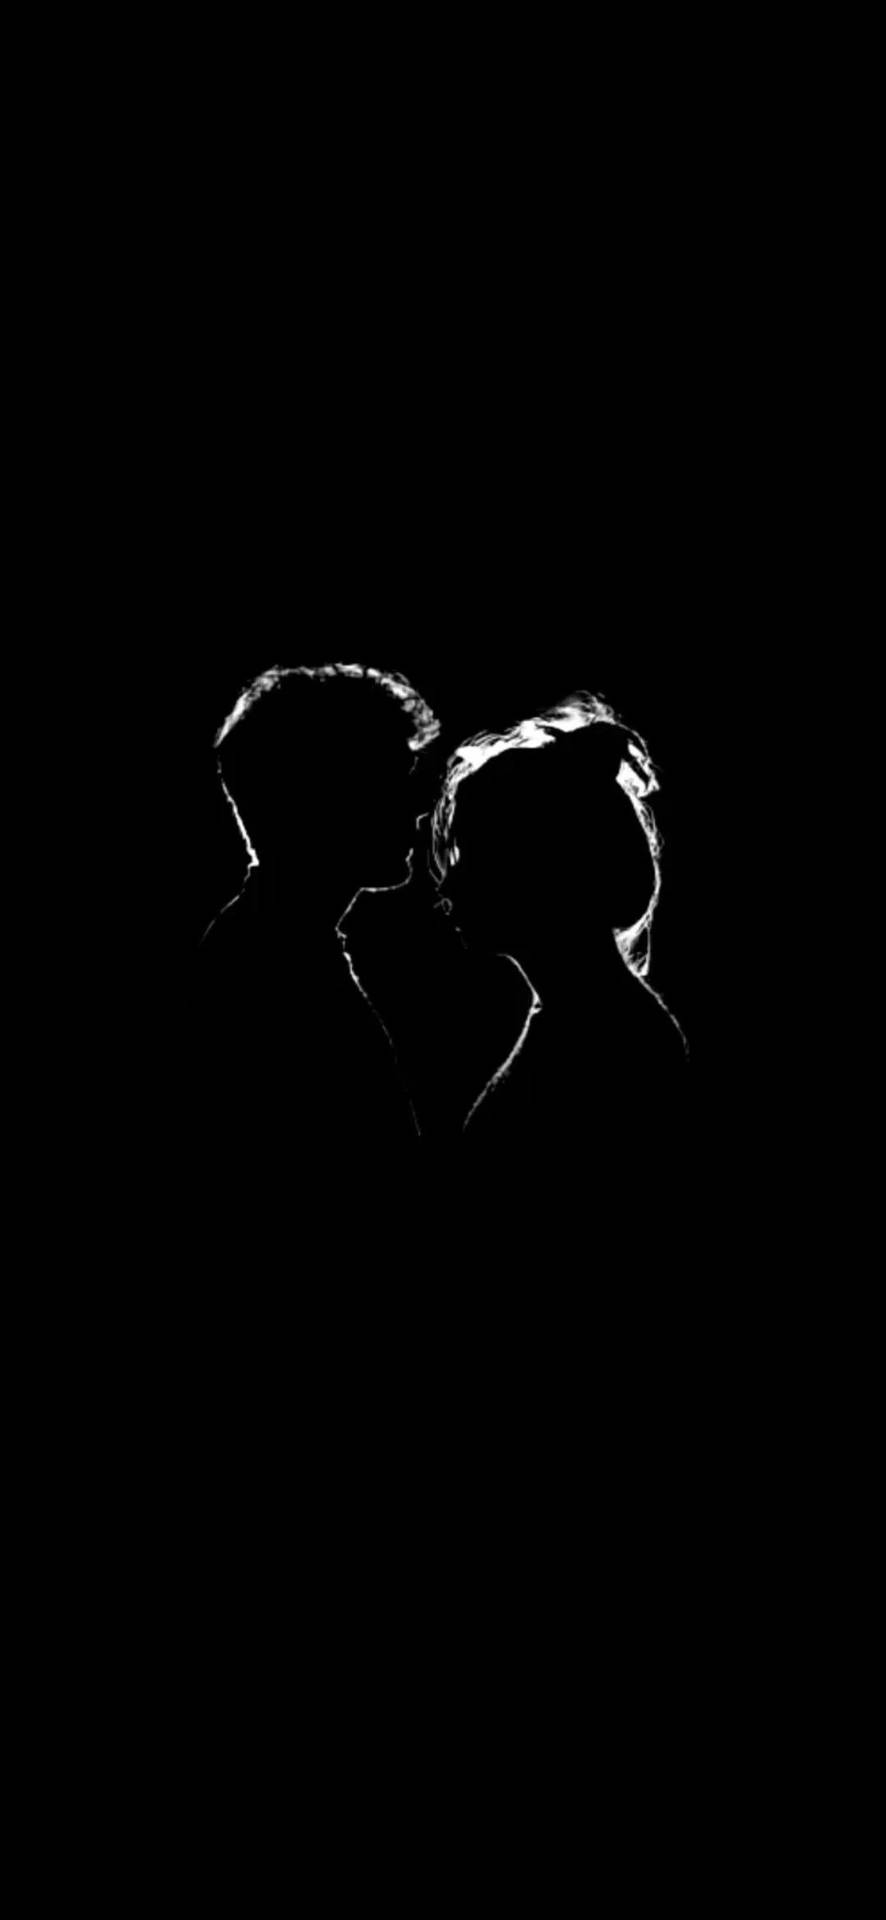 Download Love Black And White Couple Silhouette Wallpaper ...